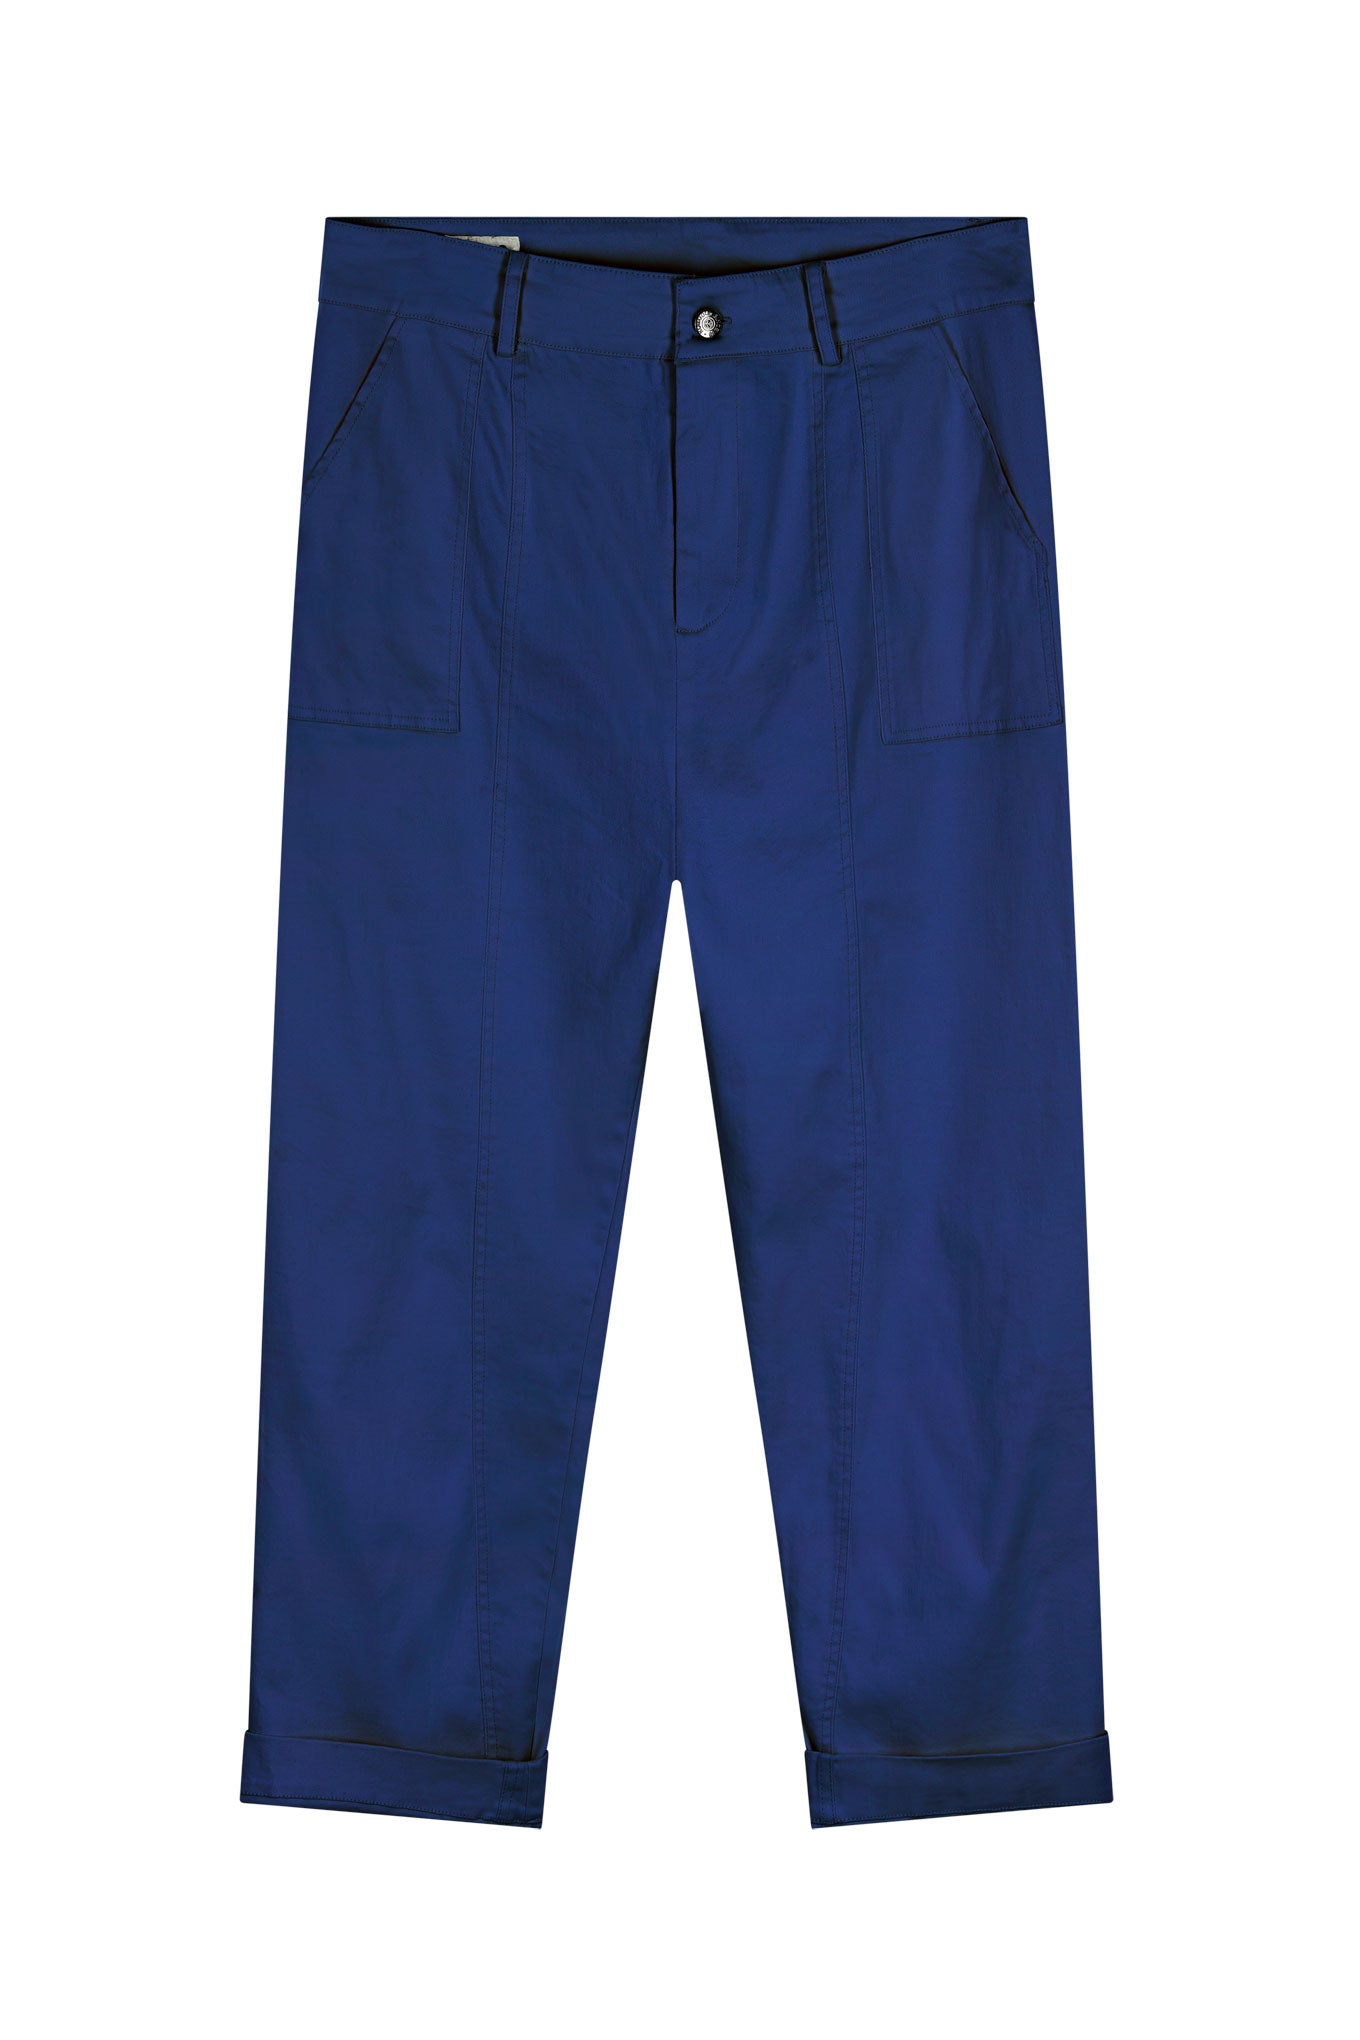 Komodo Men's Blue Nizana Organic Cotton Straight Leg Trousers Navy